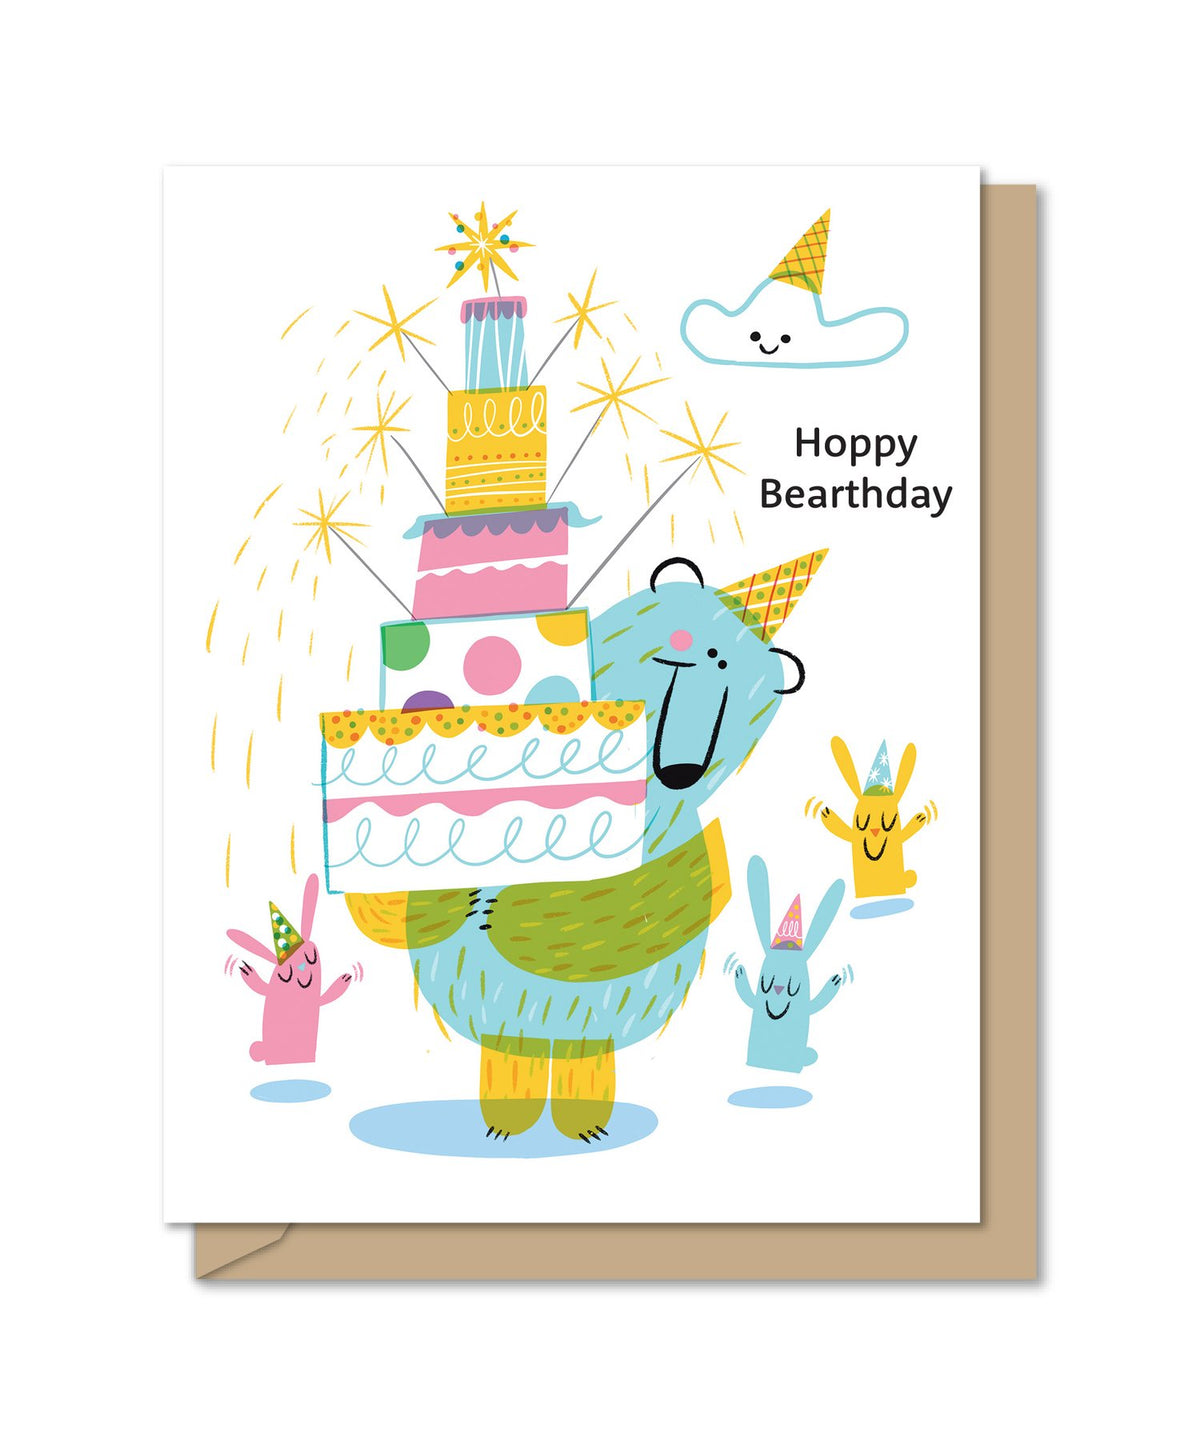 Hoppy Bearthday Birthday Card Cover